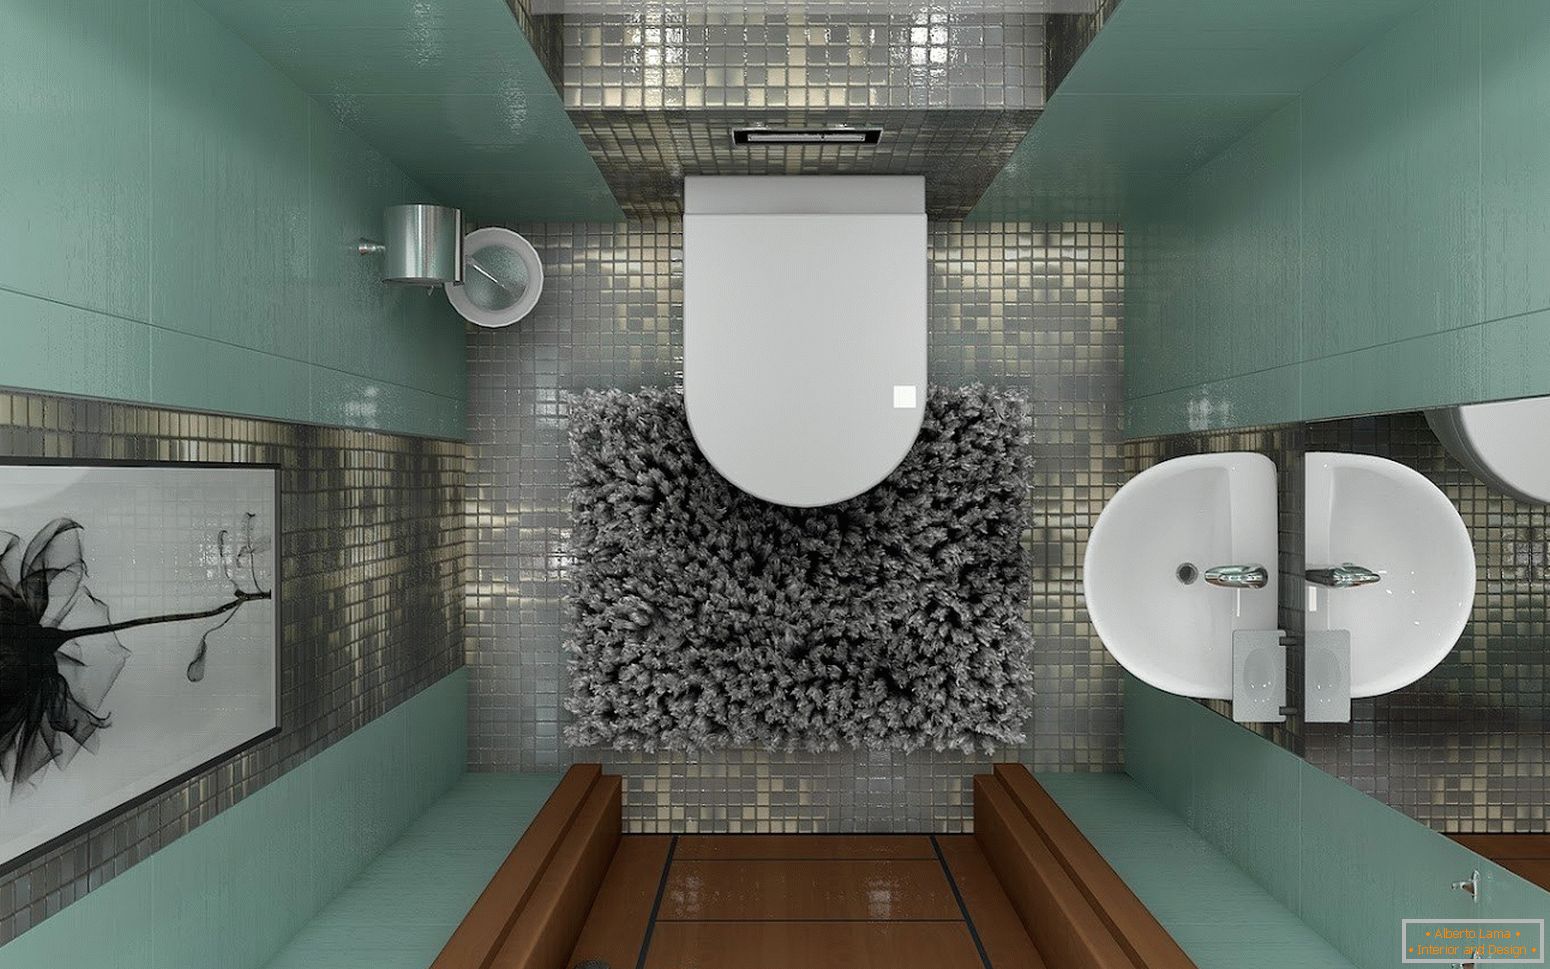 Toilet design